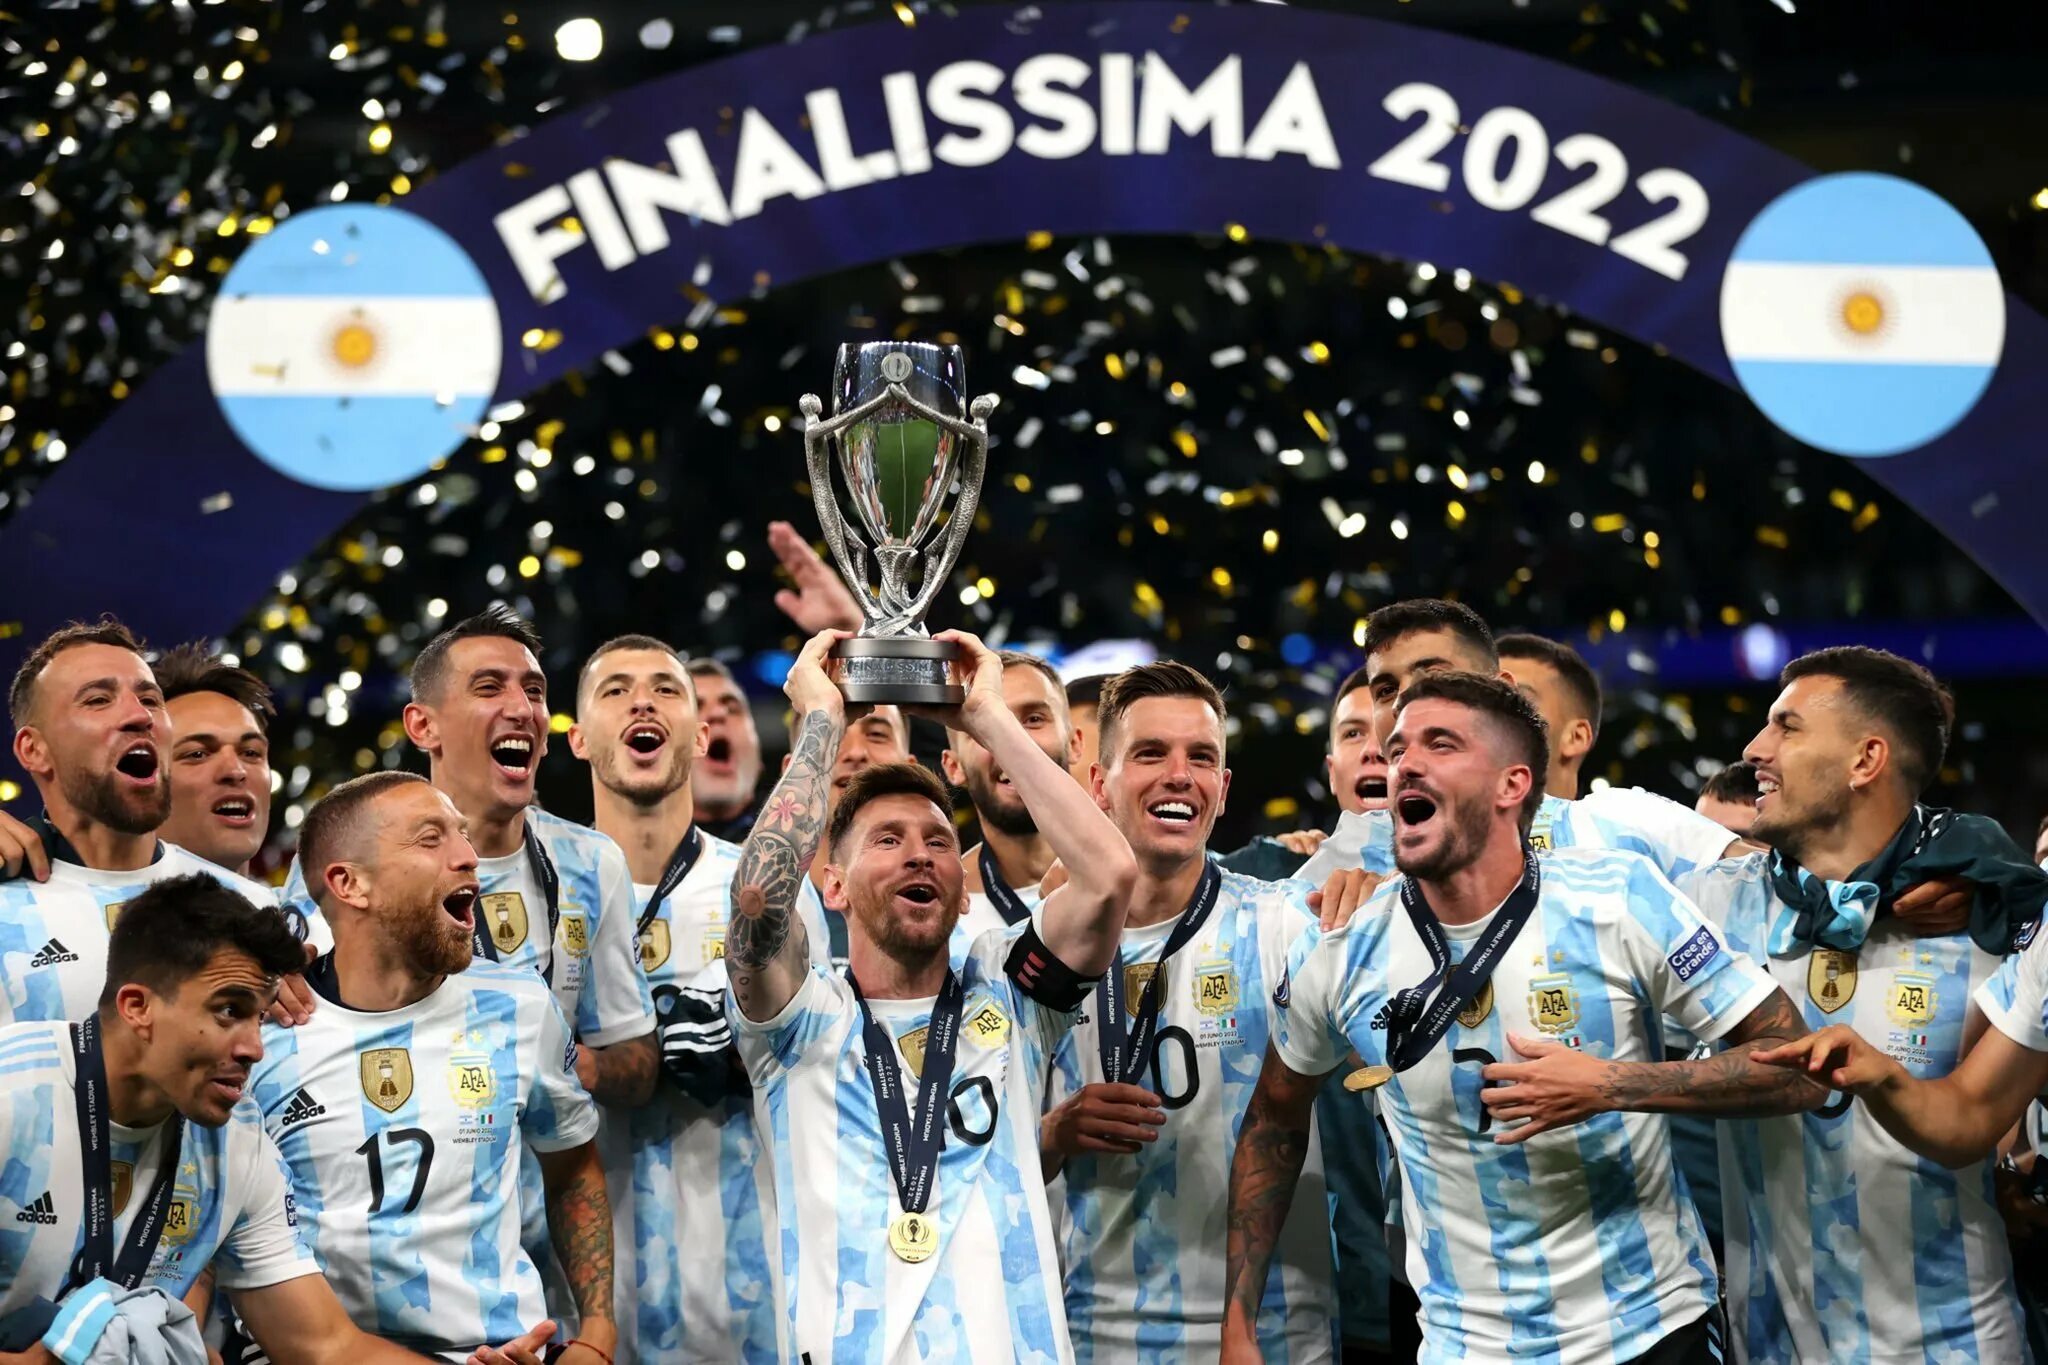 Месси Аргентина 2022 с Кубком. Месси сборная Аргентины 2022. Аргентина победа Месси 2022. Месси победитель finalissima 2022.